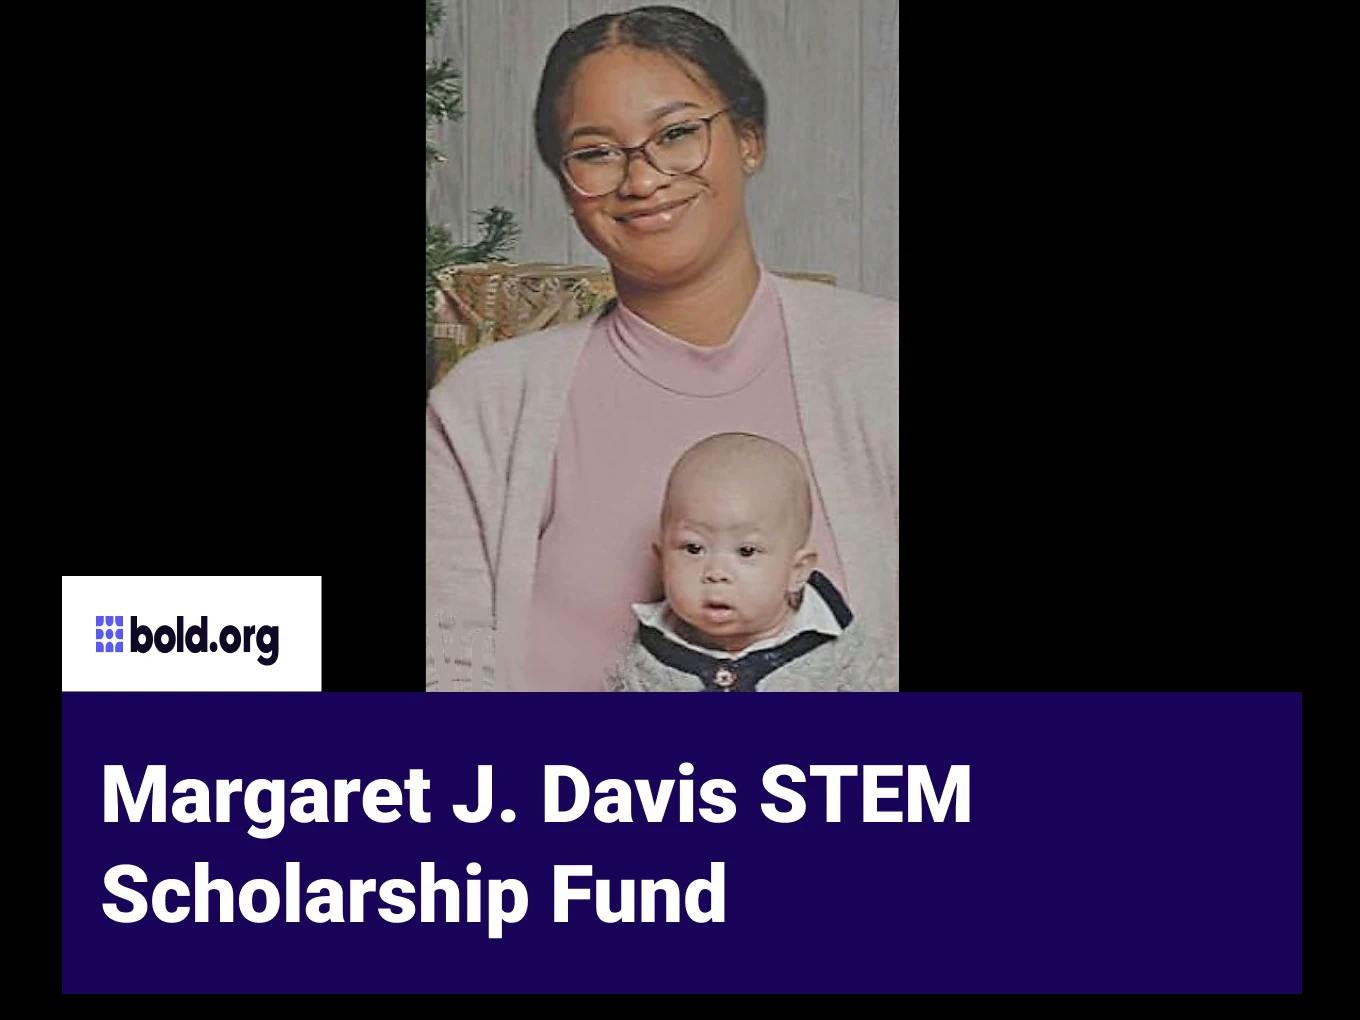 Margaret J. Davis STEM Scholarship Fund